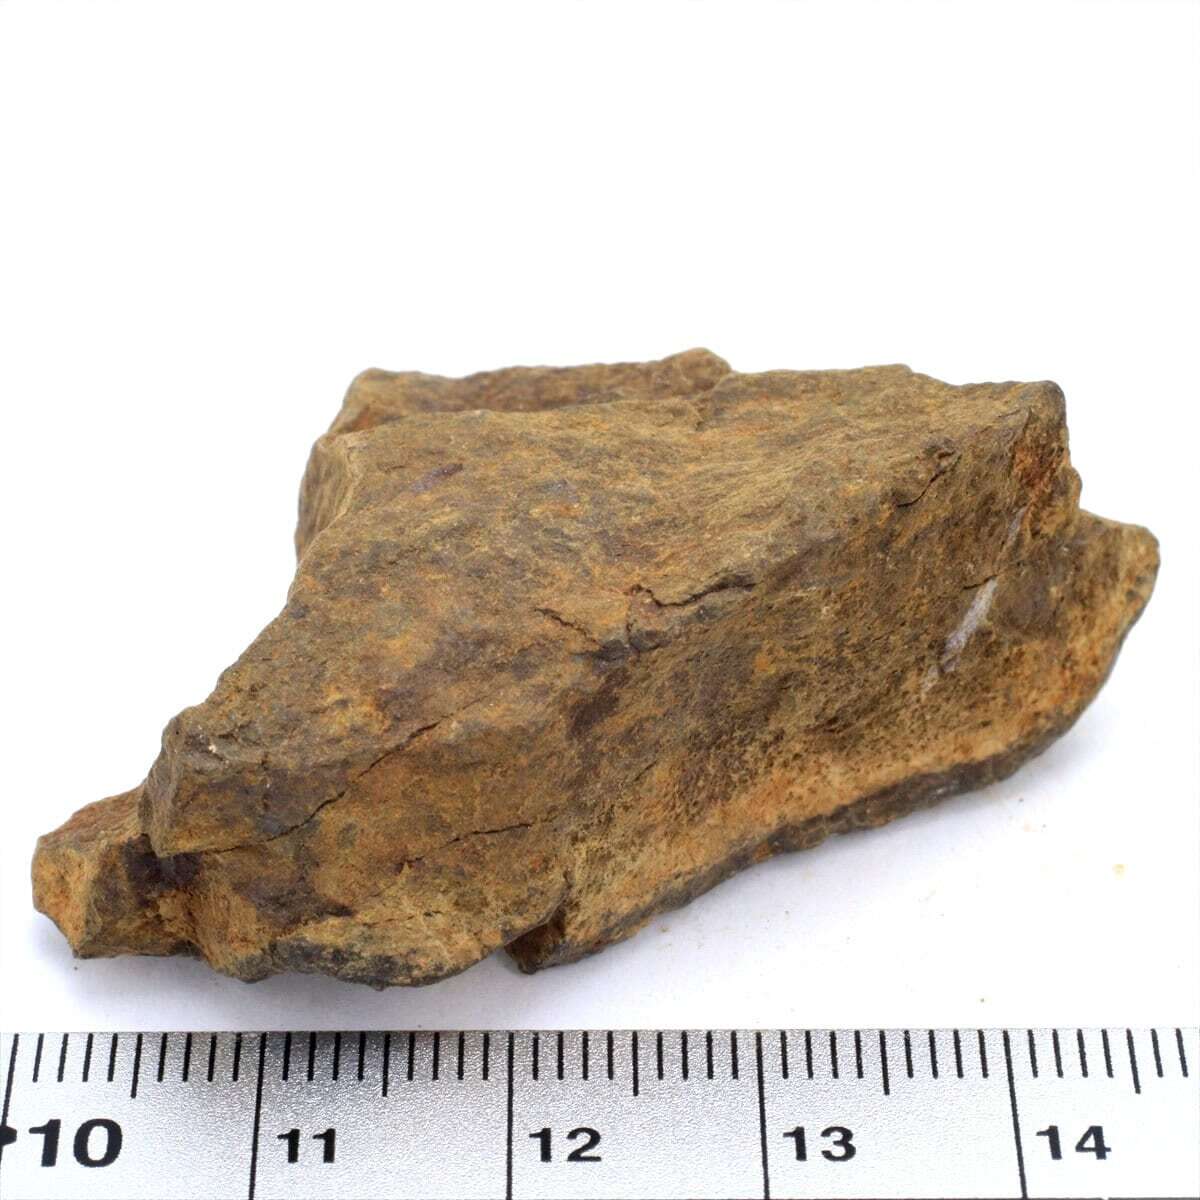 NWAxxx 40.7g 原石 標本 石質 隕石 普通コンドライト No.28